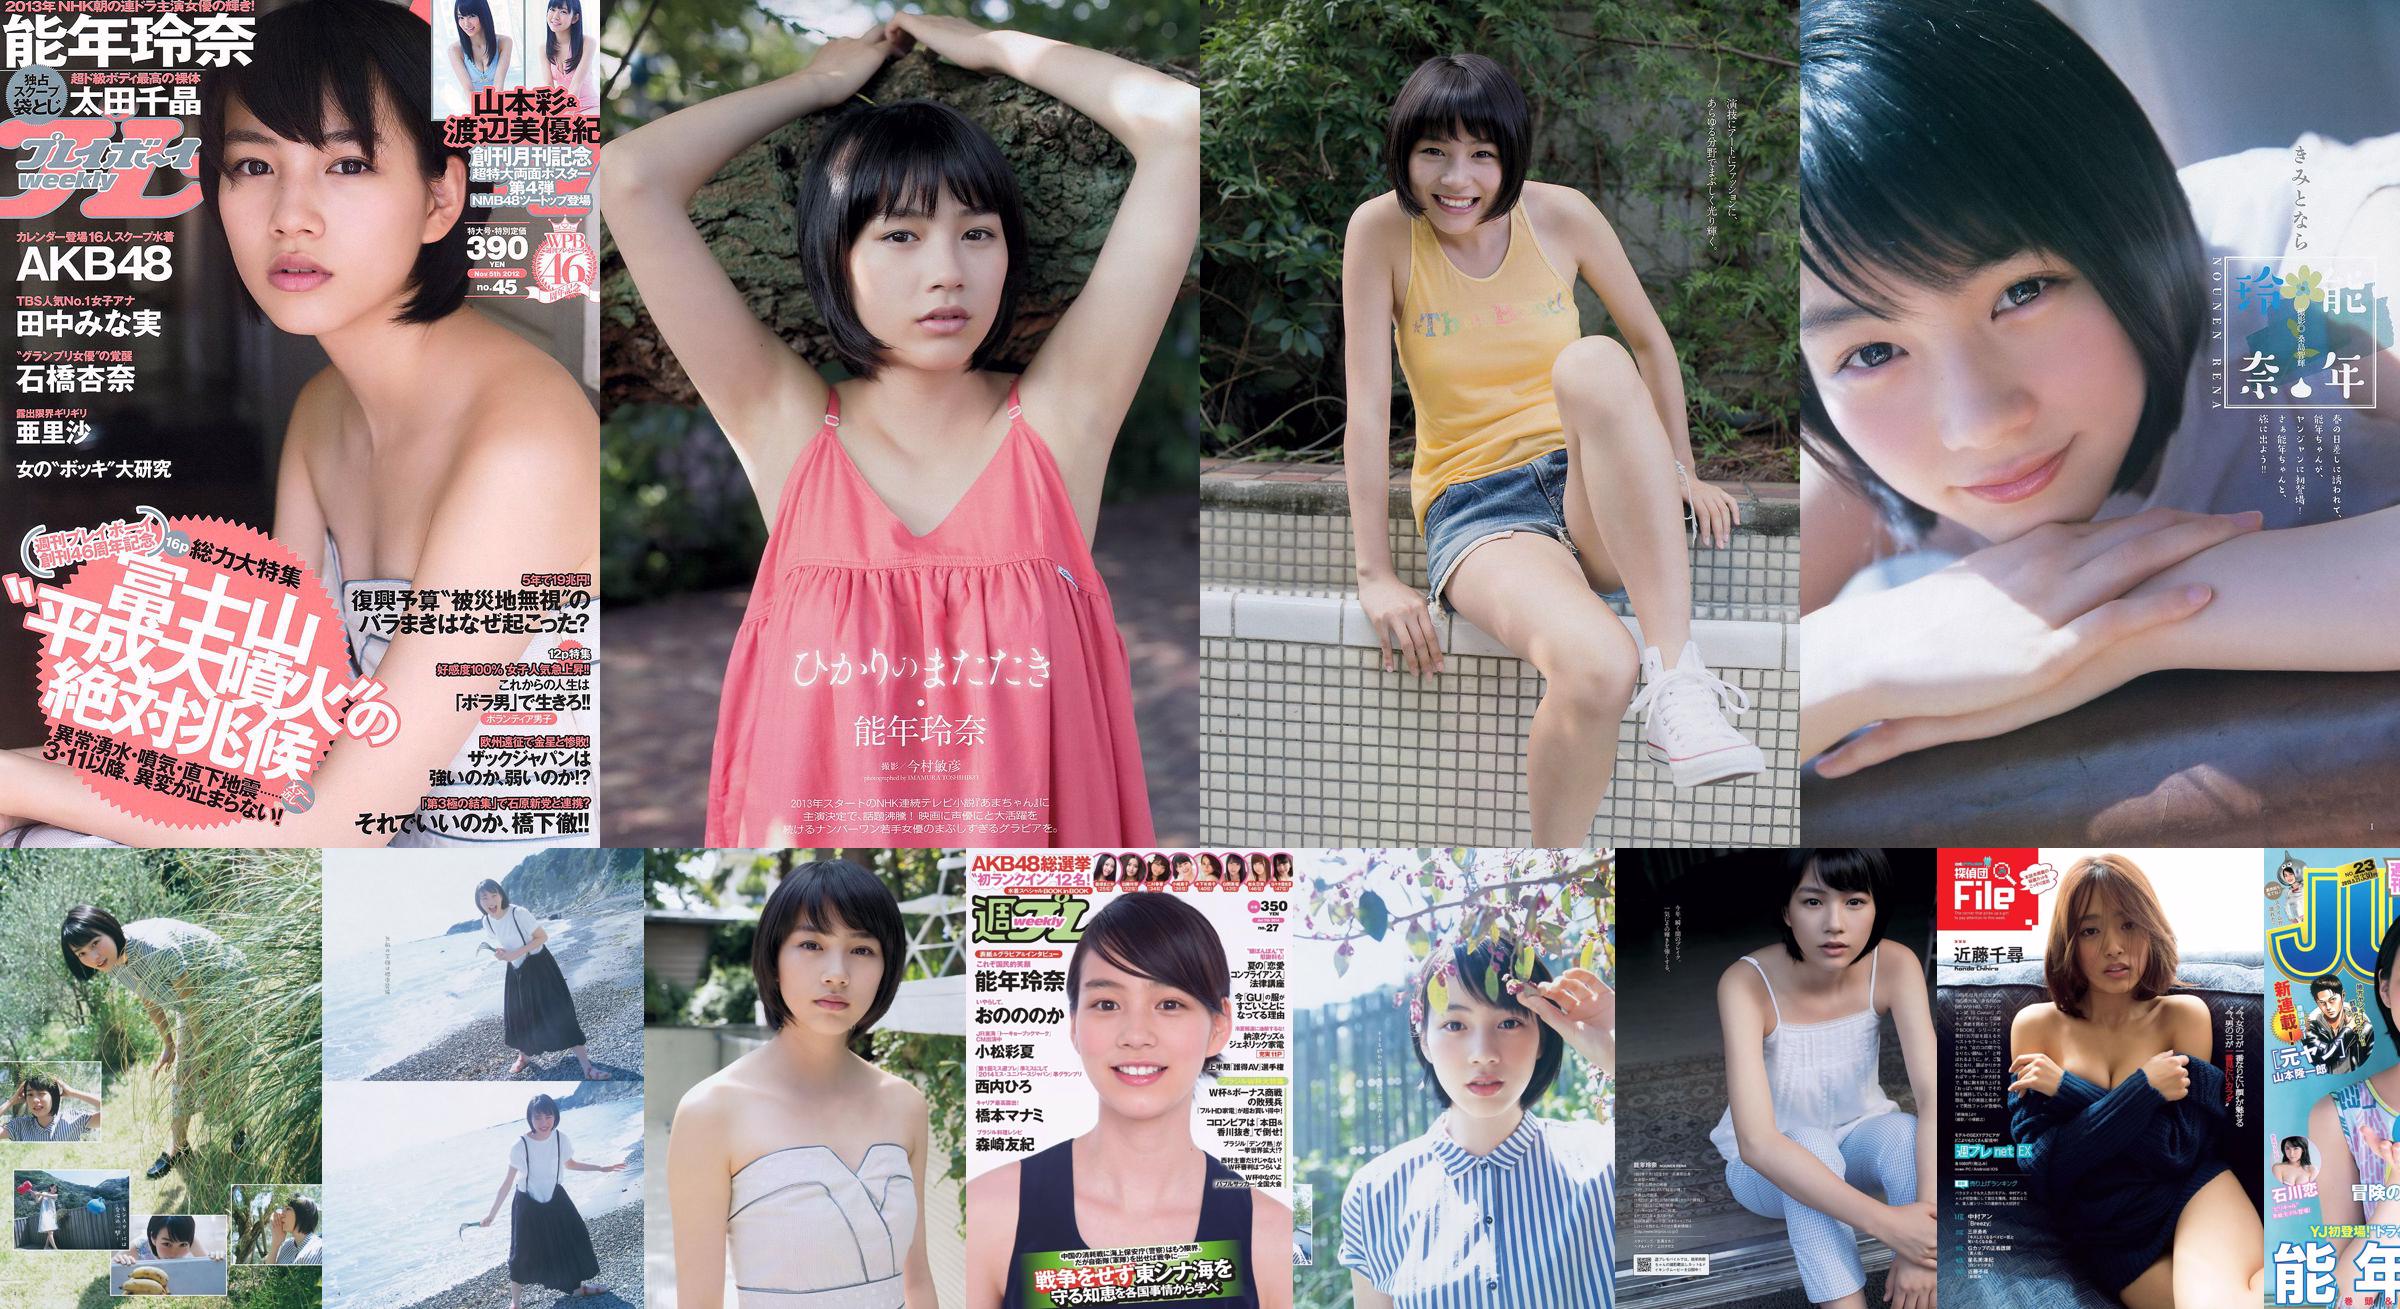 Rena Nonen AKB48 Anna Ishibashi Arisa Ili Chiaki Ota [Playboy hebdomadaire] 2012 No.45 Photo No.2971bc Page 3